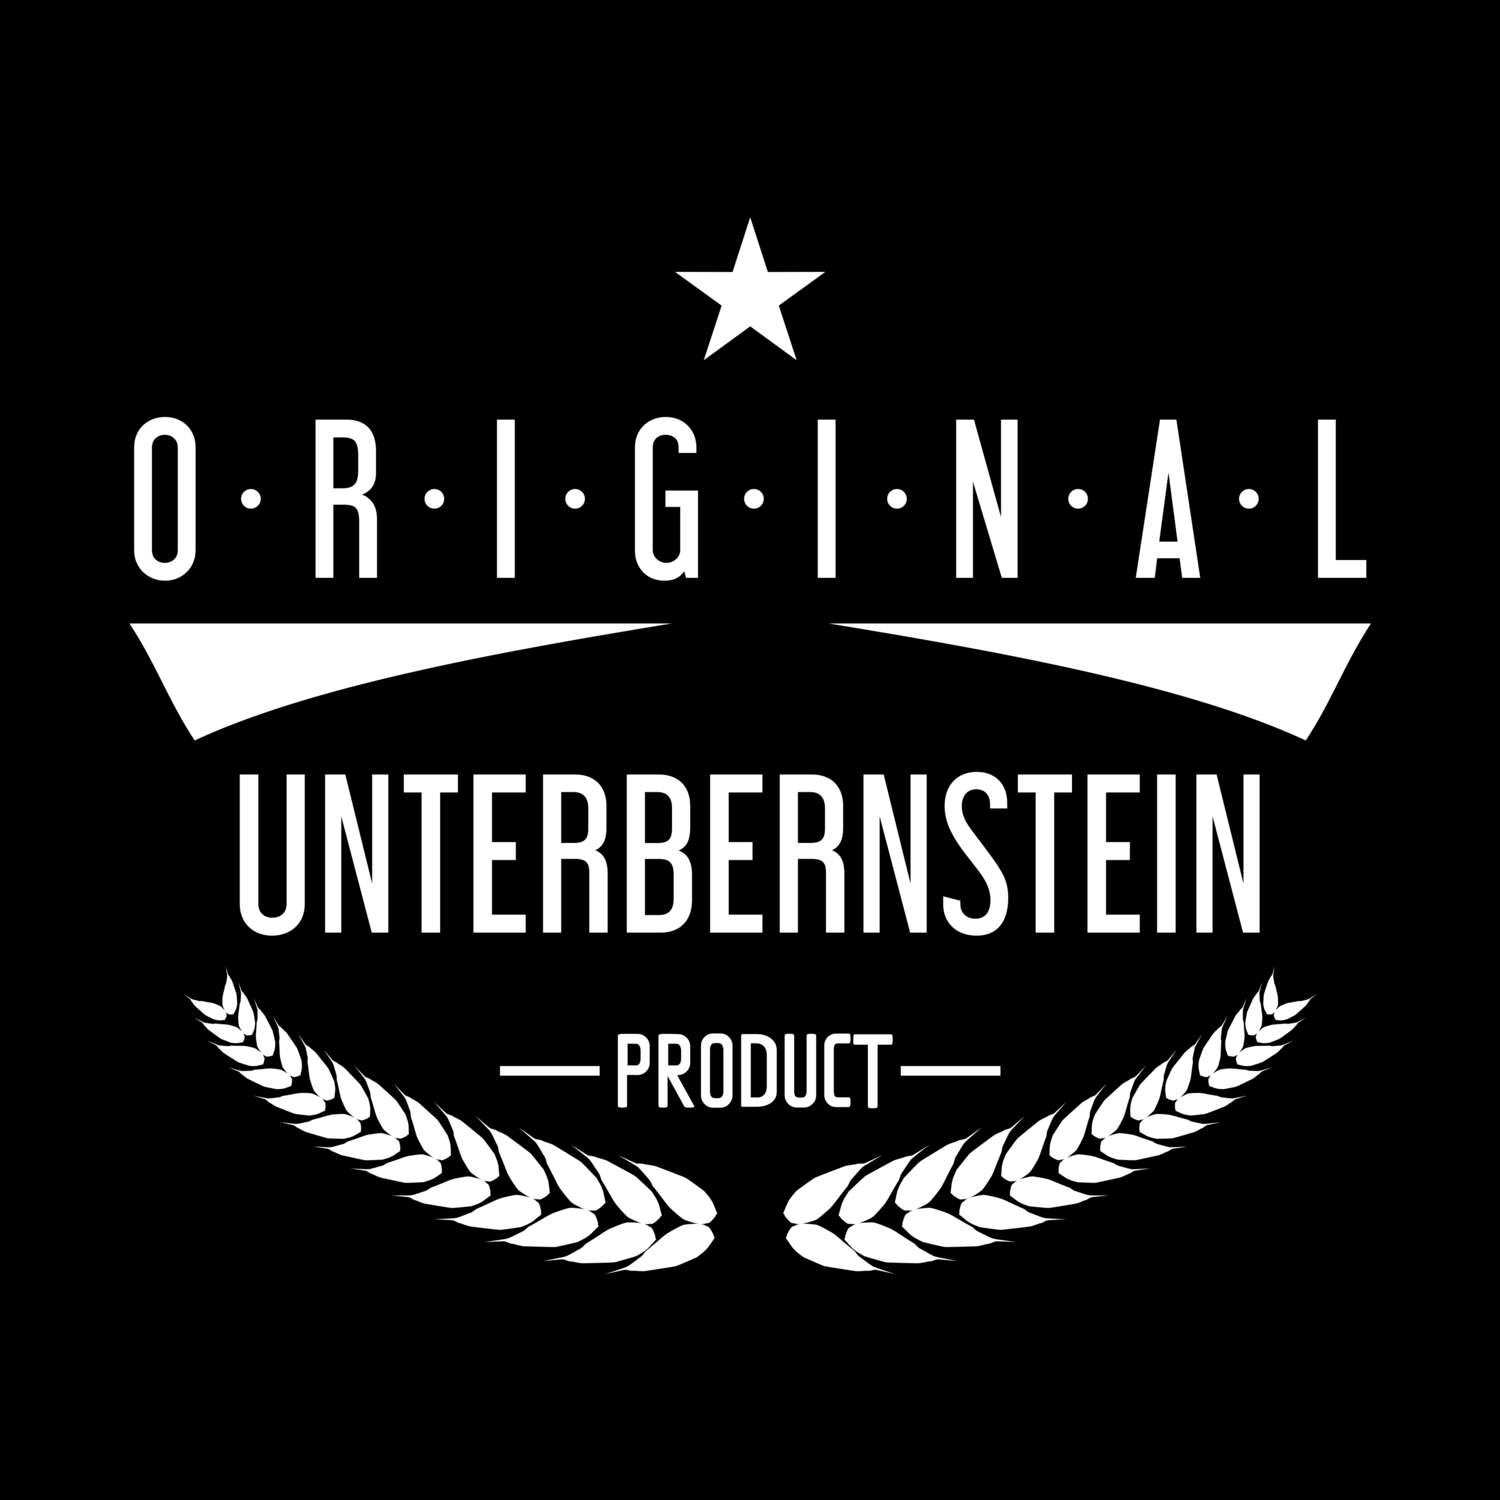 Unterbernstein T-Shirt »Original Product«